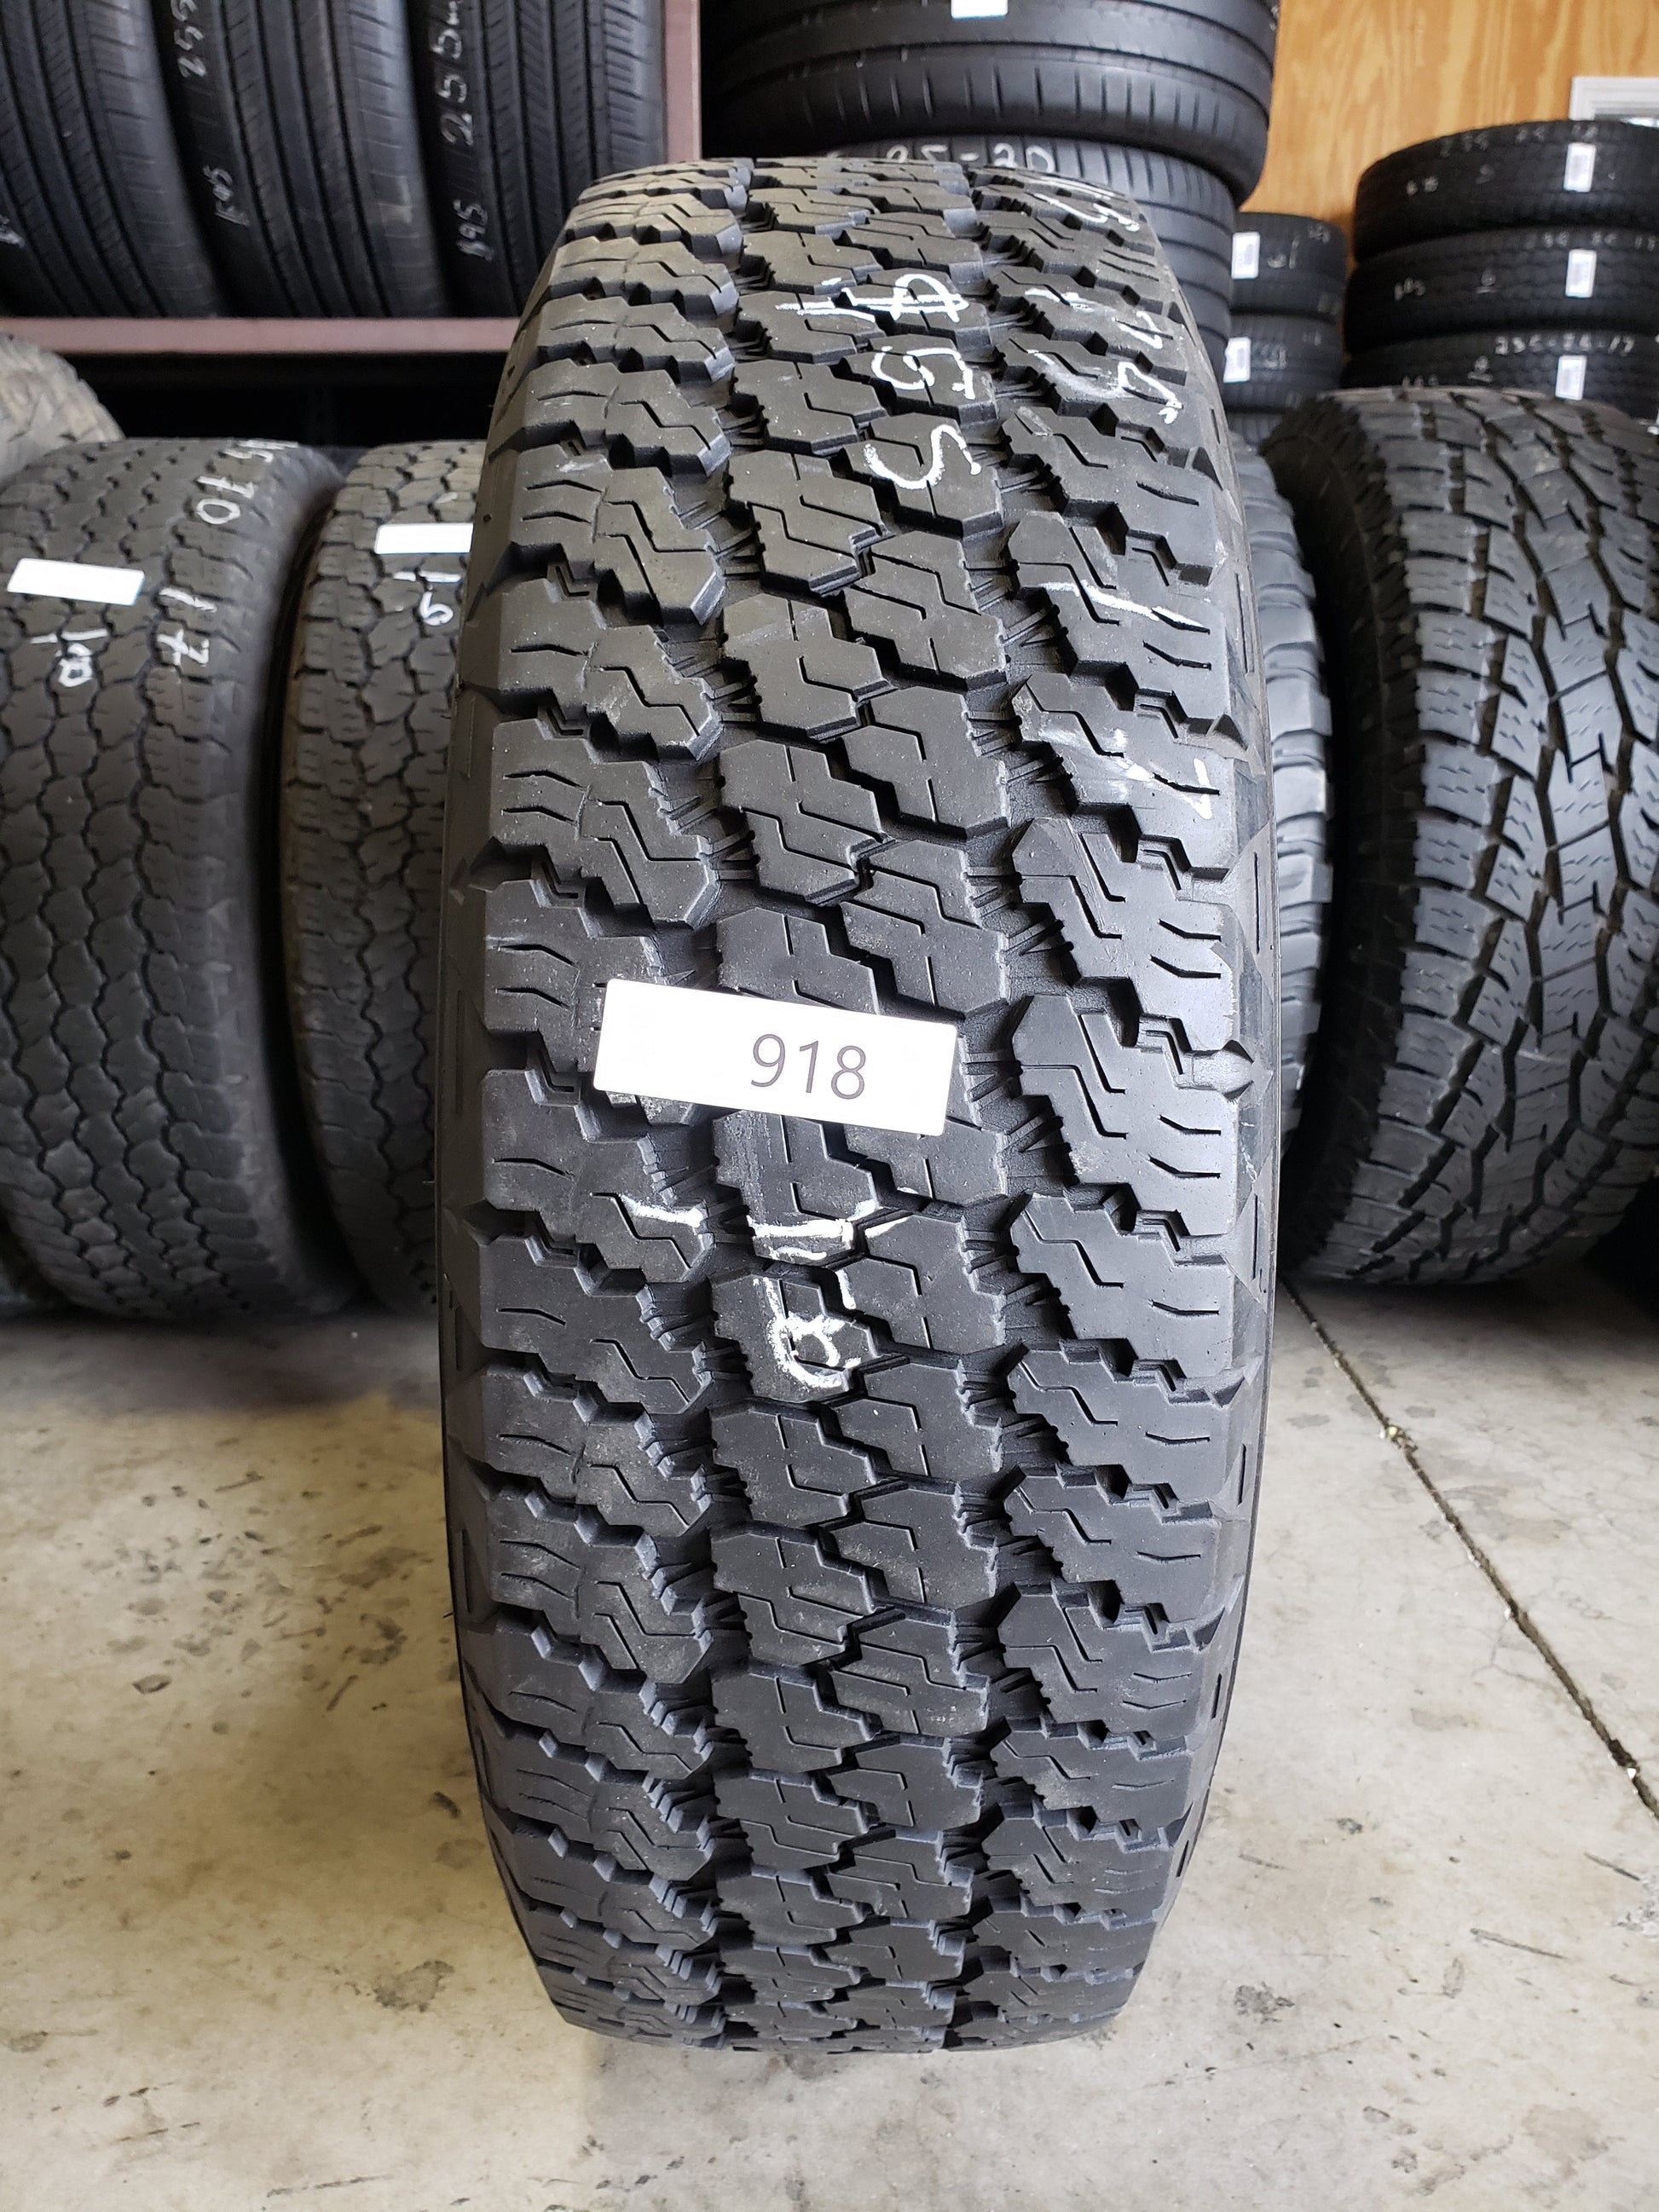 SINGLE 245/75R17 Goodyear Wrangler 110 T SL - Premium Used Tires